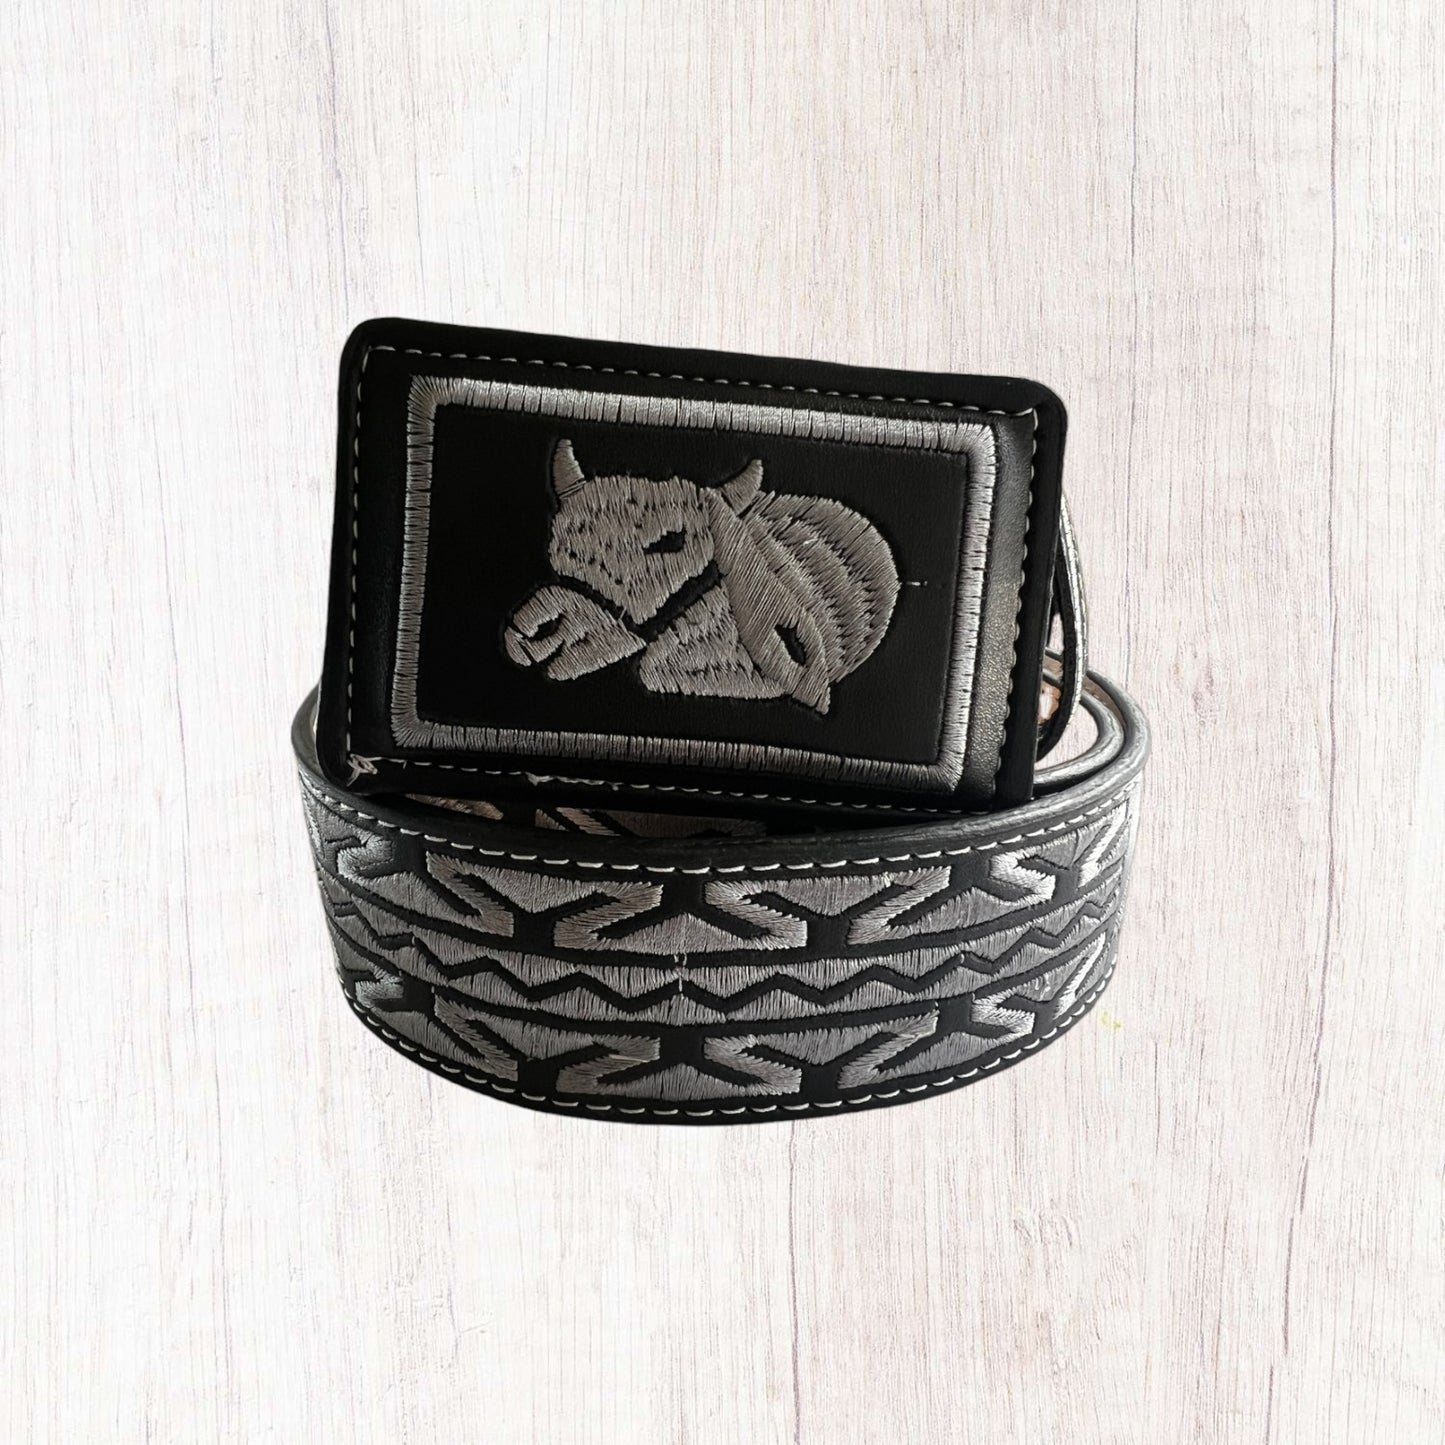 Cintó Bordado/Embroidered Belt